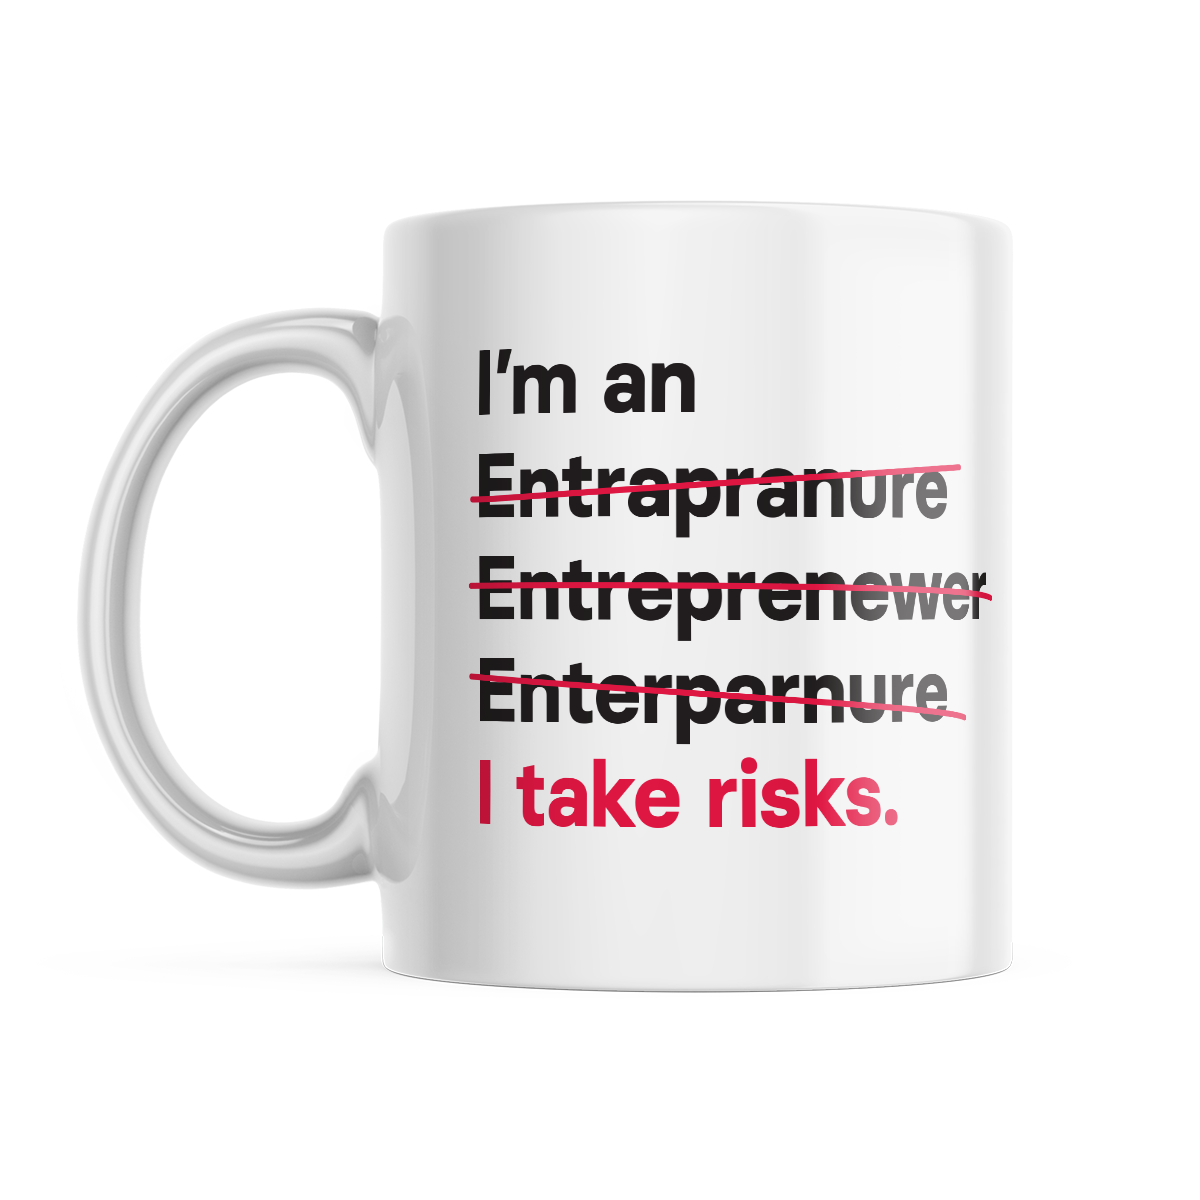 I'm an Entrepreneur